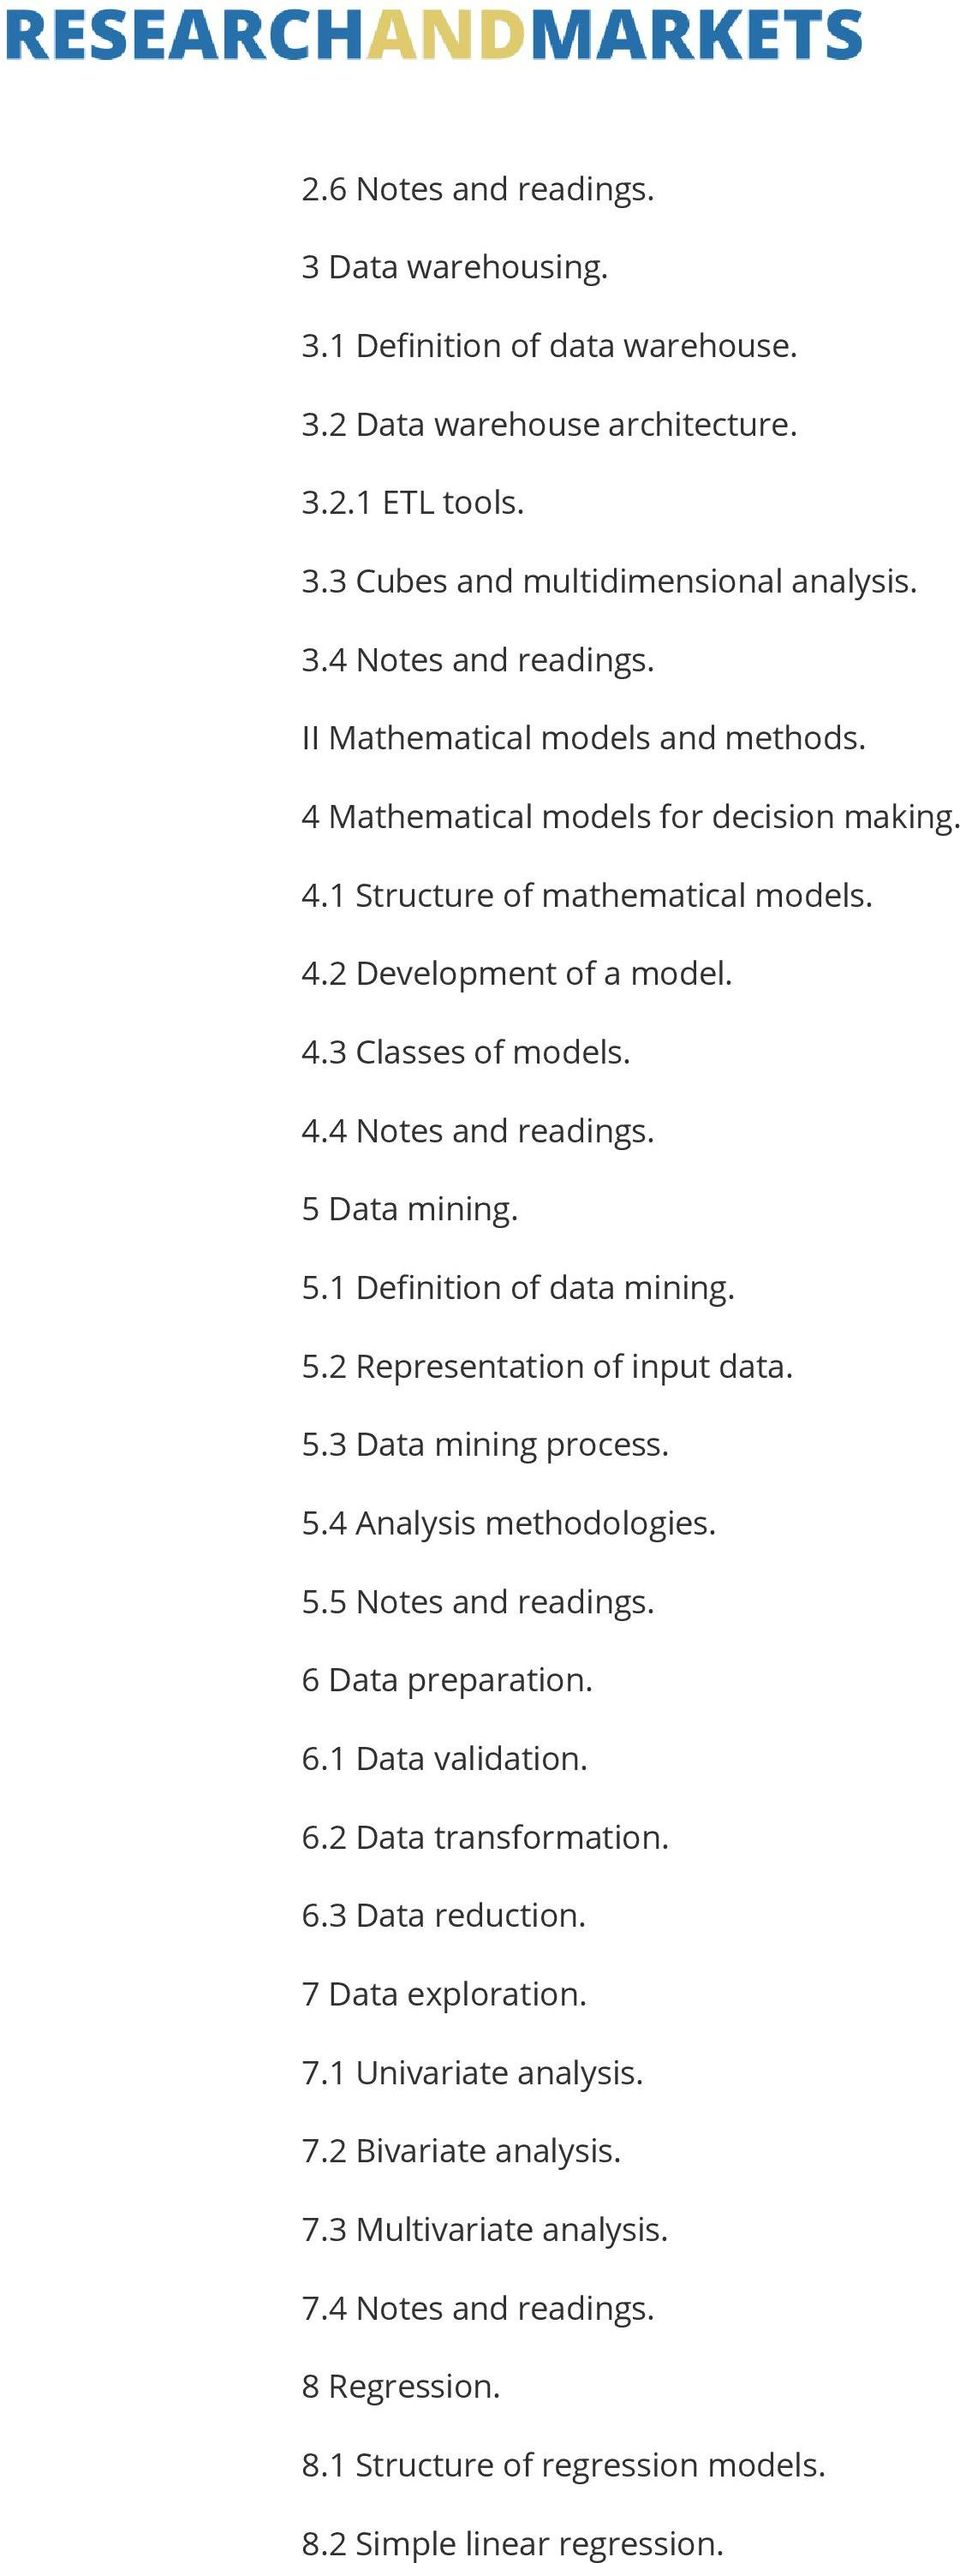 5 Data mining. 5.1 Definition of data mining. 5.2 Representation of input data. 5.3 Data mining process. 5.4 Analysis methodologies. 5.5 Notes and readings. 6 Data preparation. 6.1 Data validation. 6.2 Data transformation.